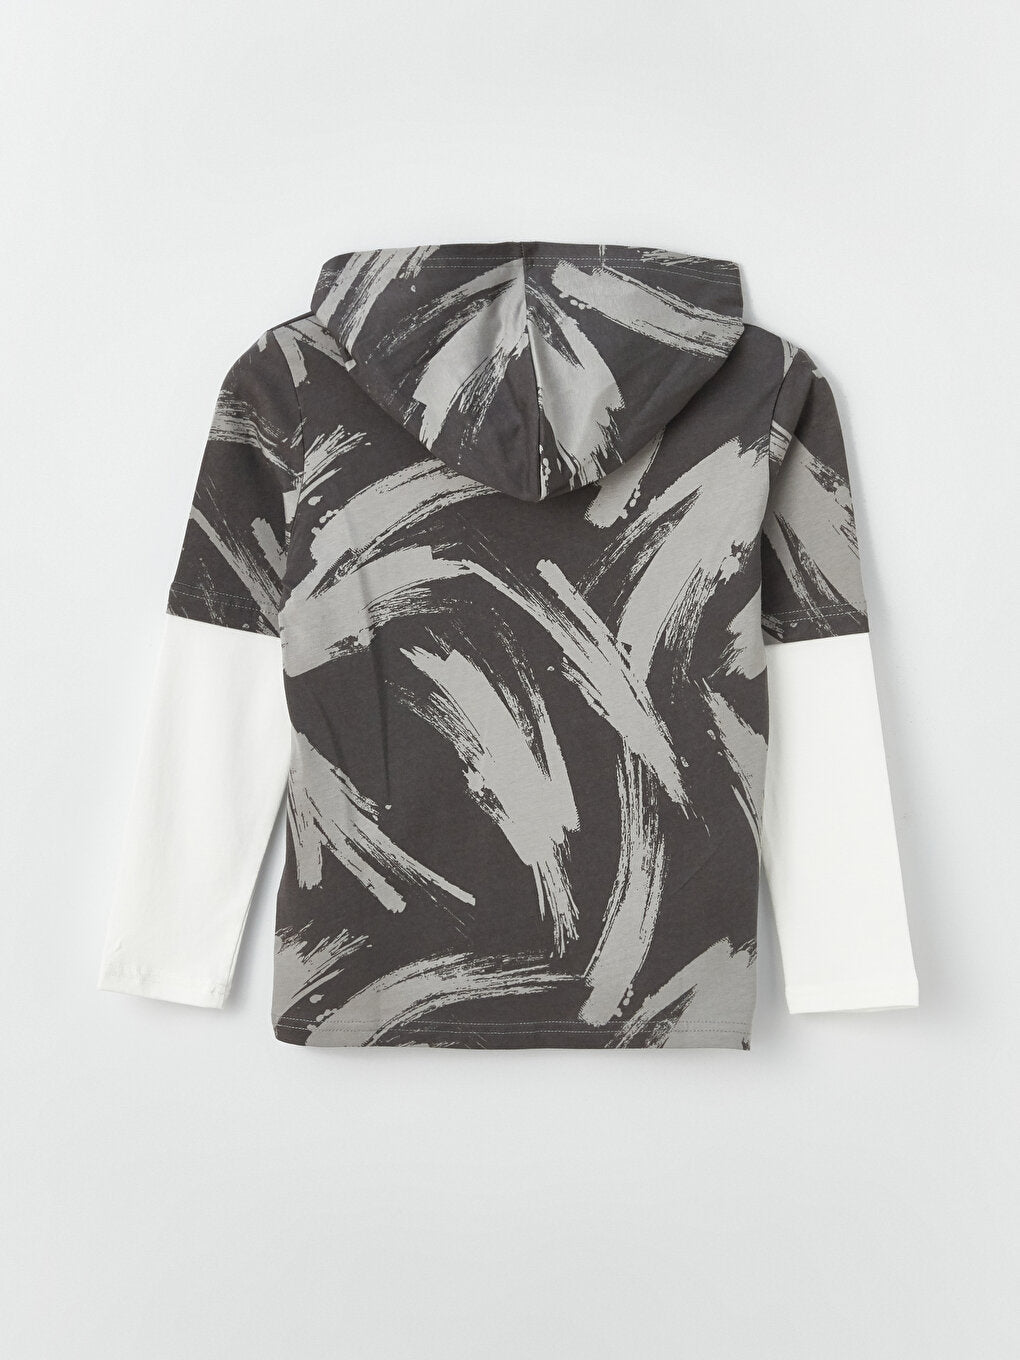 Hooded Printed Long Sleeve Boys T-Shirt